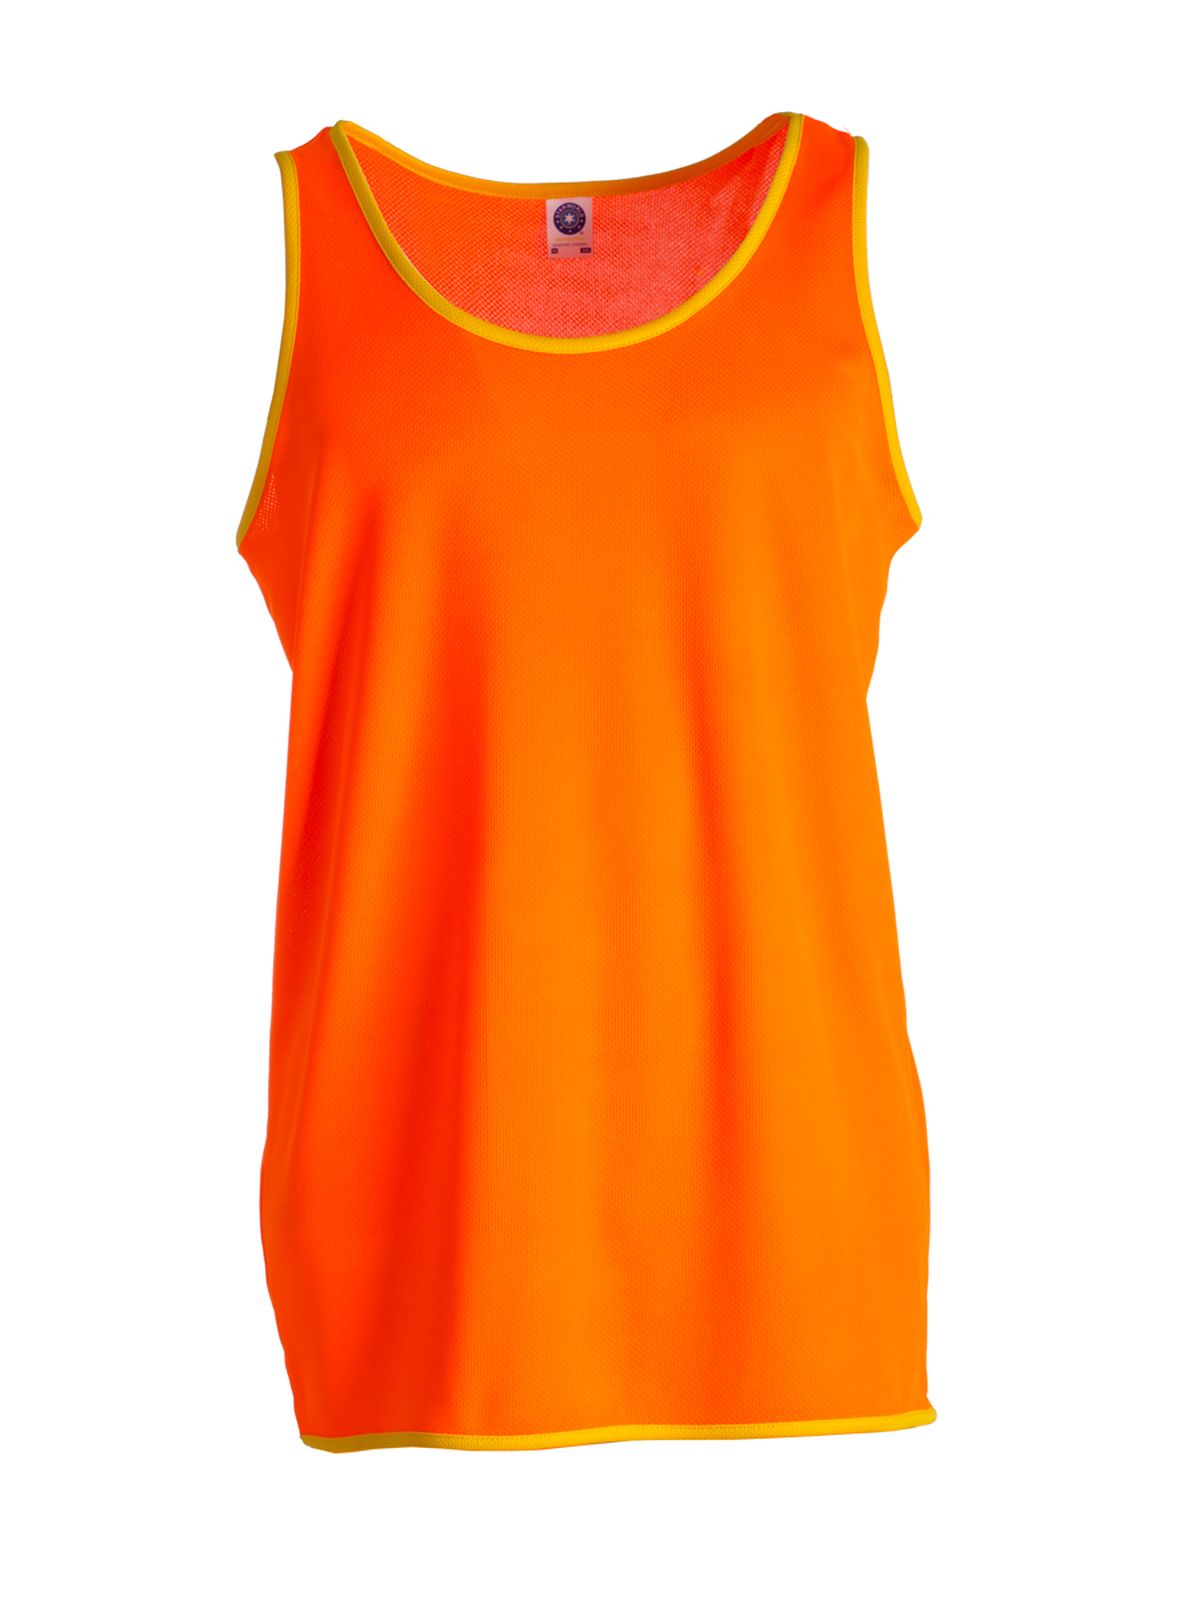 ultra-tech-contrast-running-and-sports-vest-fluorescent-orange-gold.webp